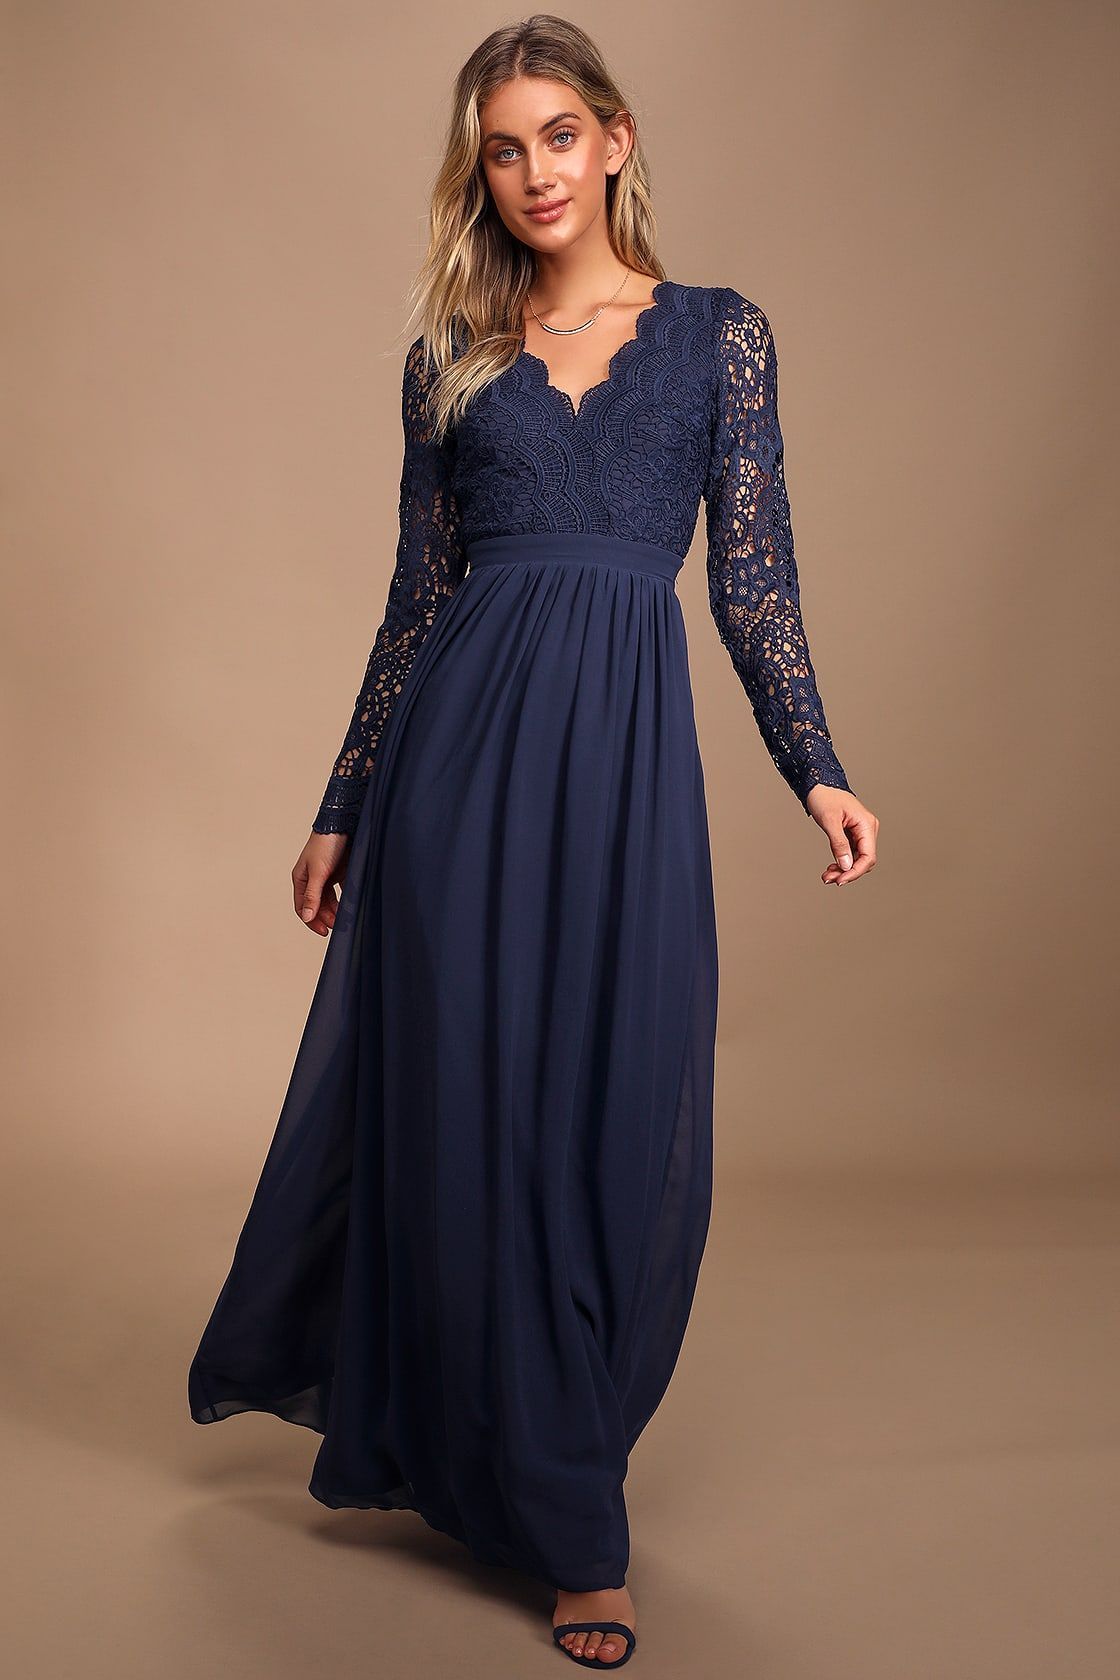 Awaken My Love Navy Blue Long Sleeve Lace Maxi Dress -   19 dress Maxi lace ideas